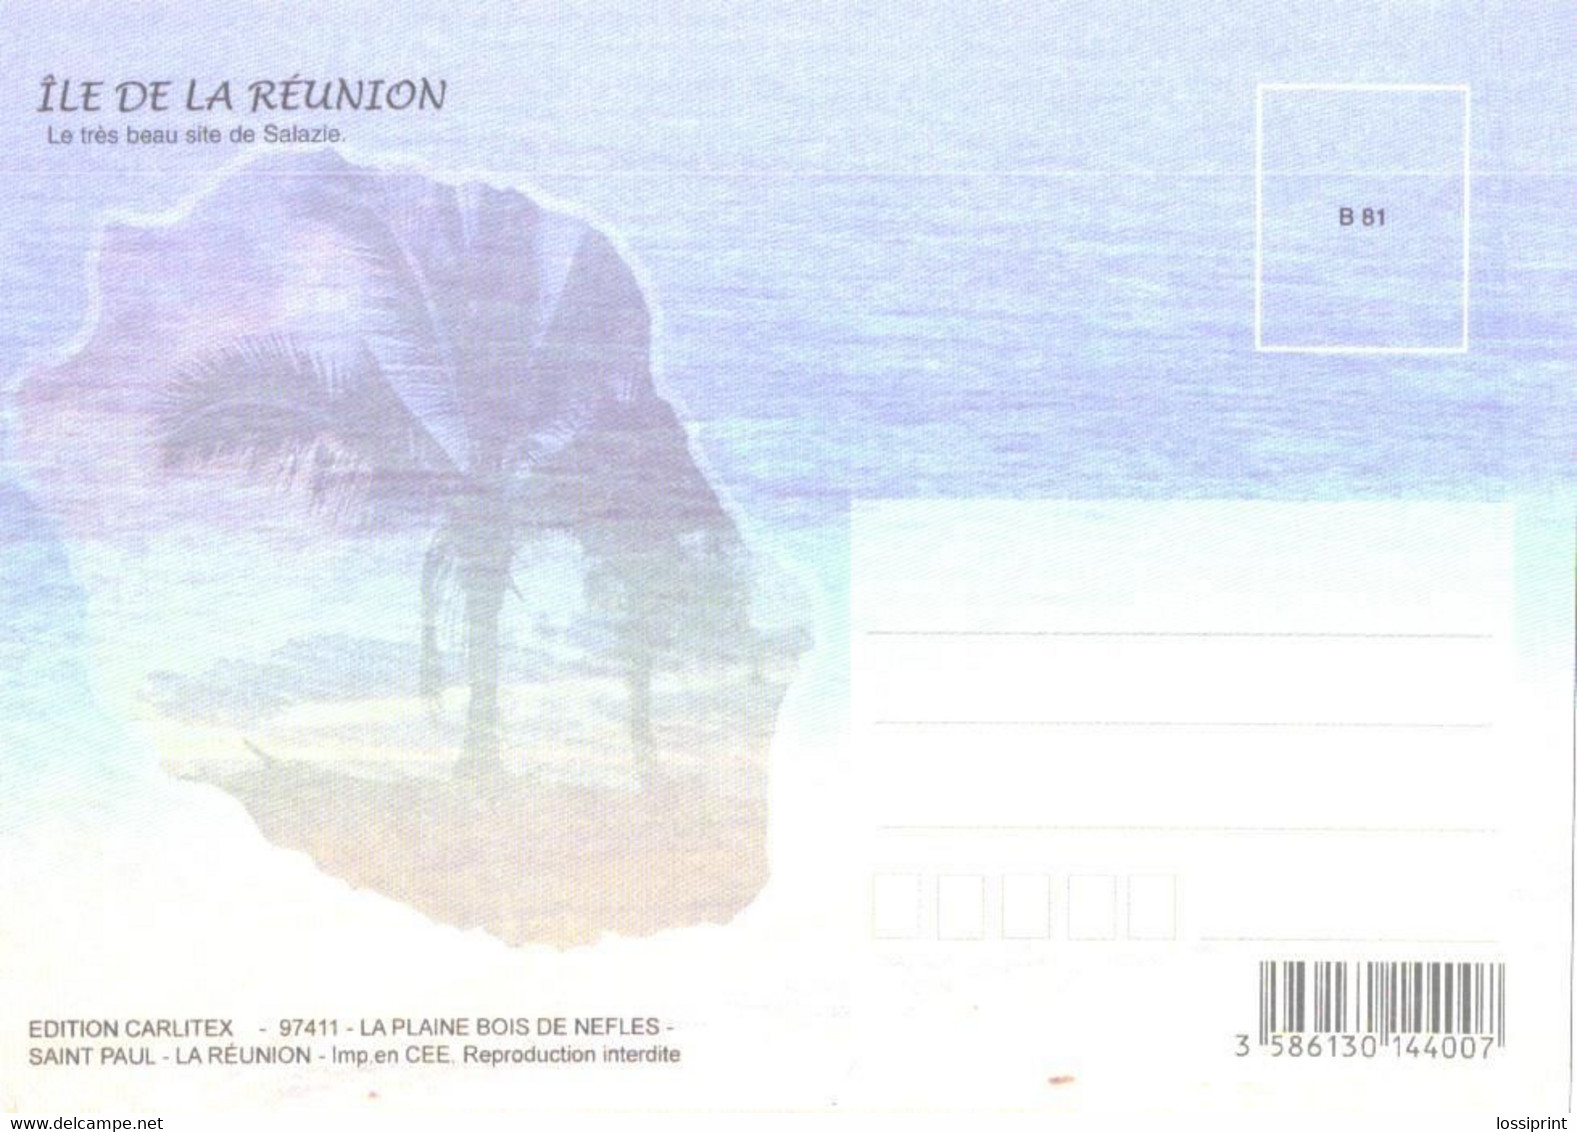 Reunion Island:Overview - Reunion